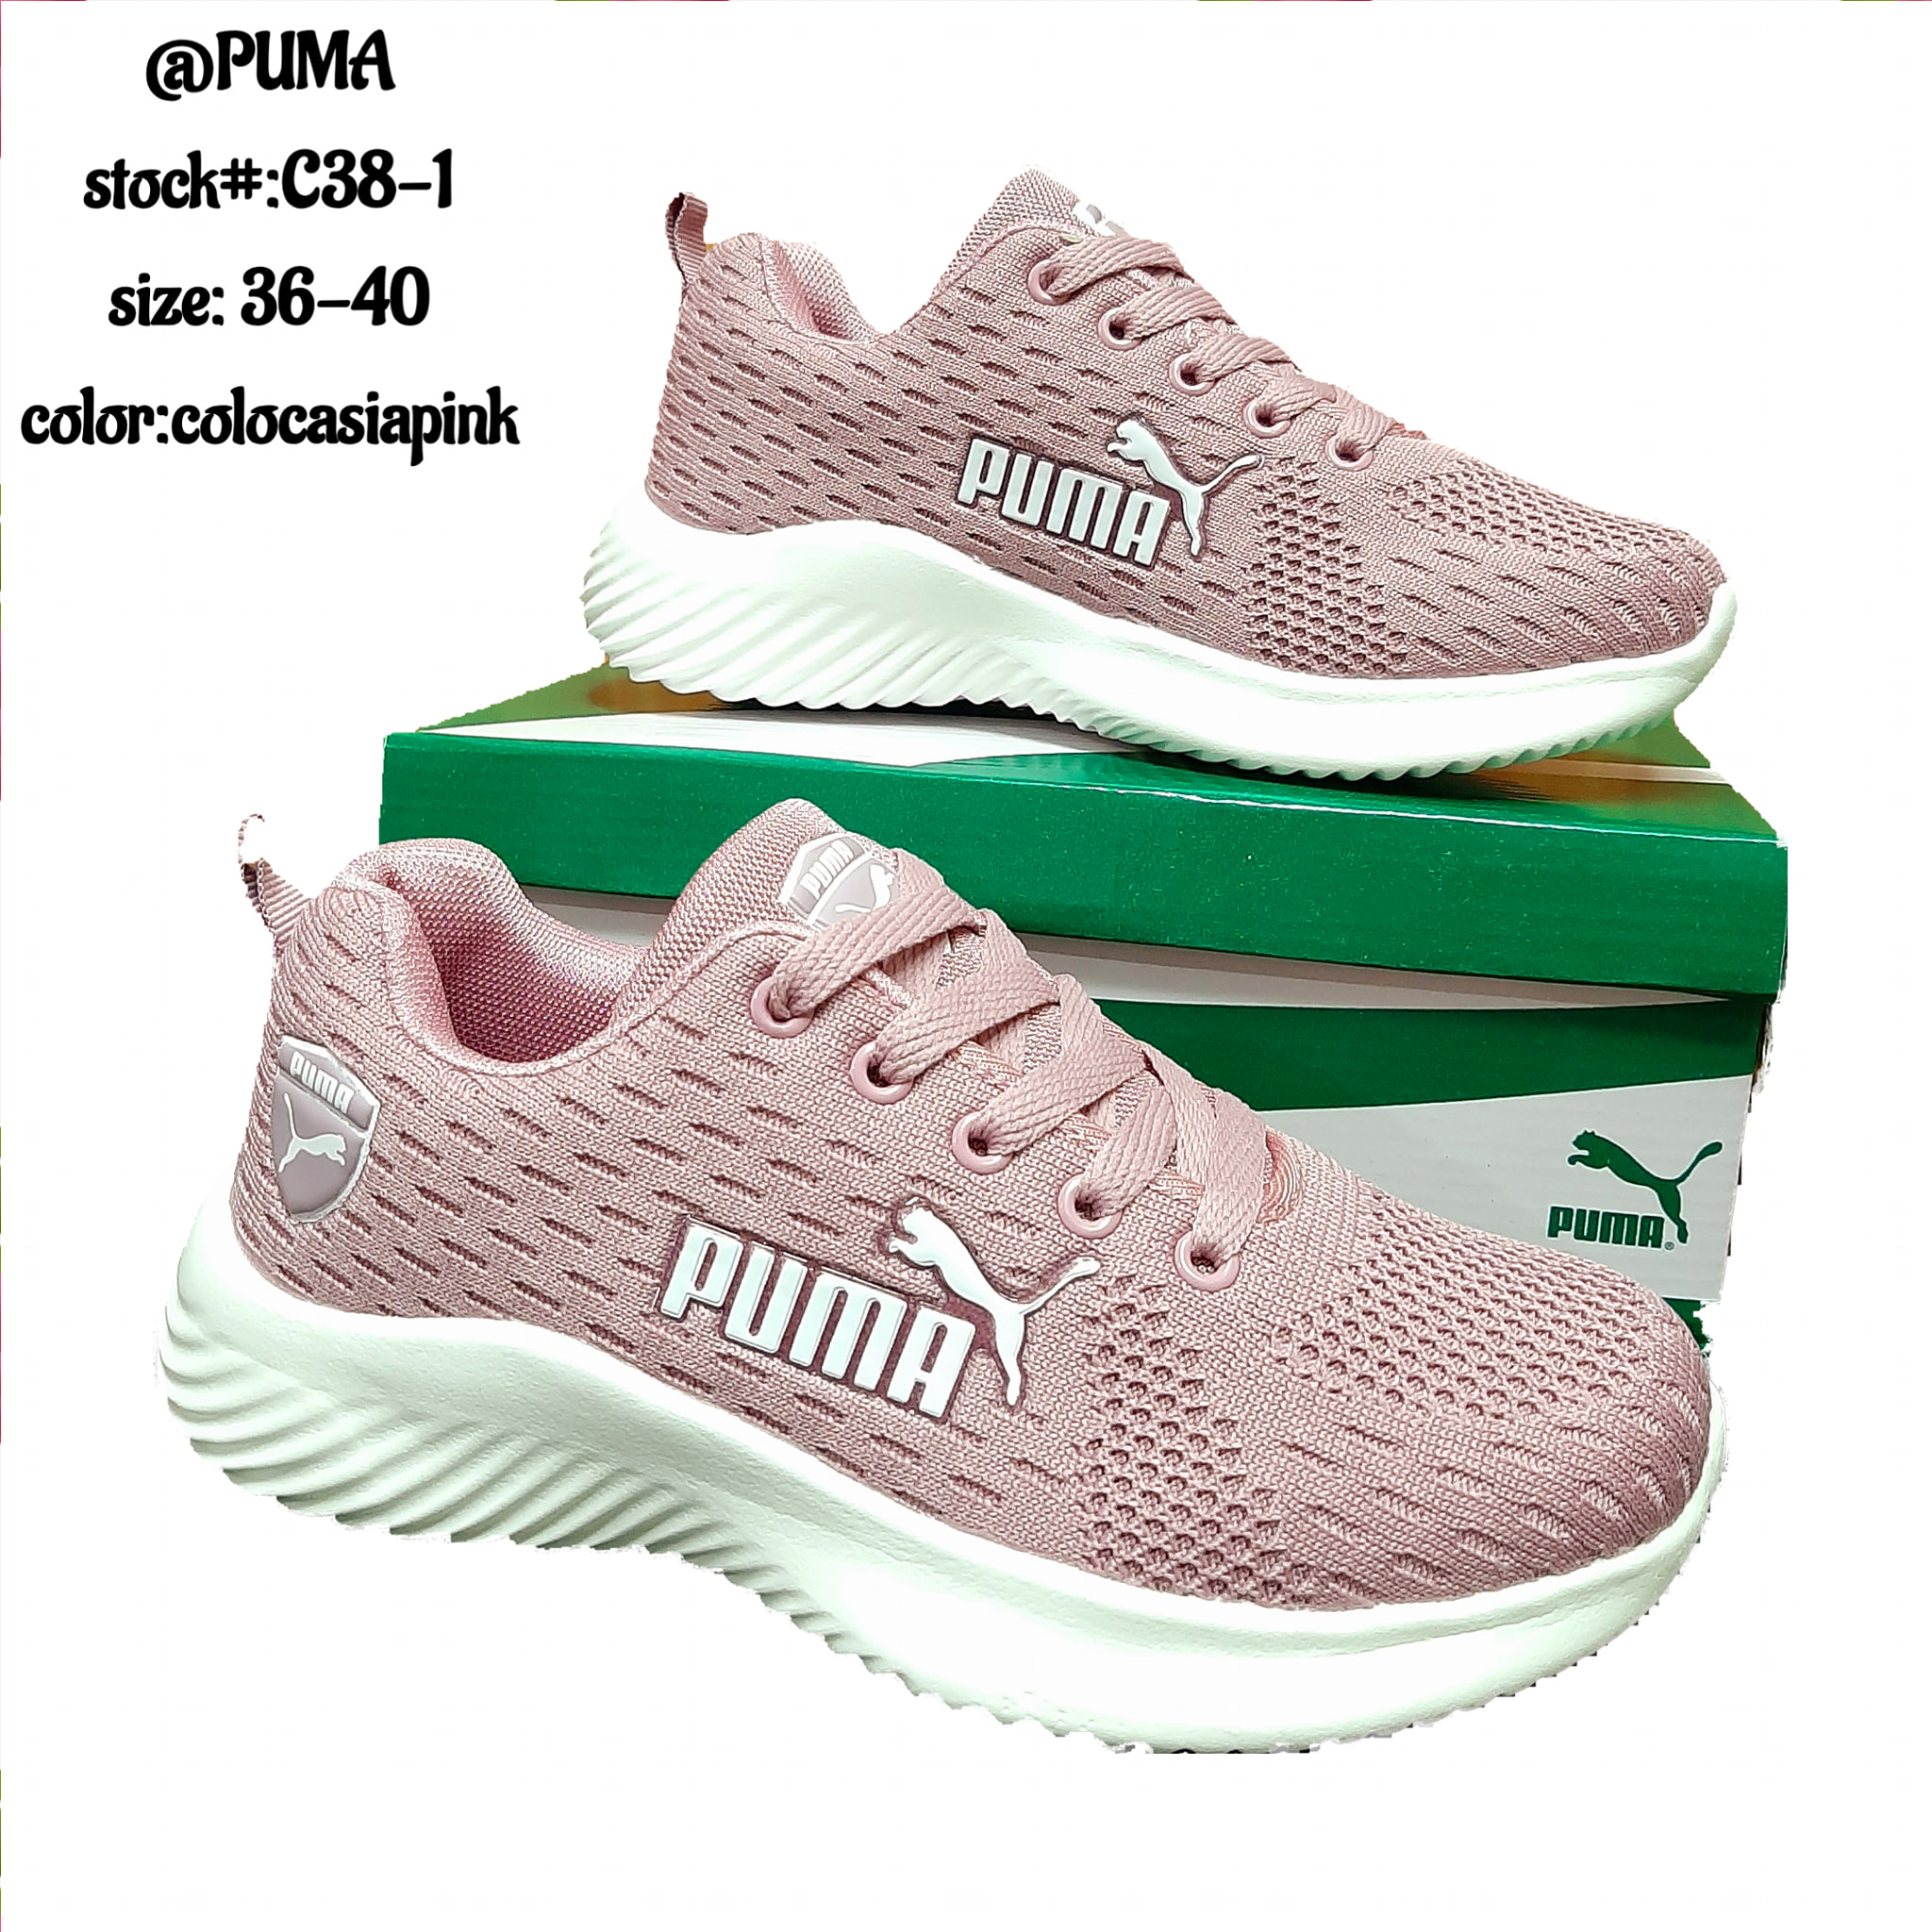 puma rubber shoes for women